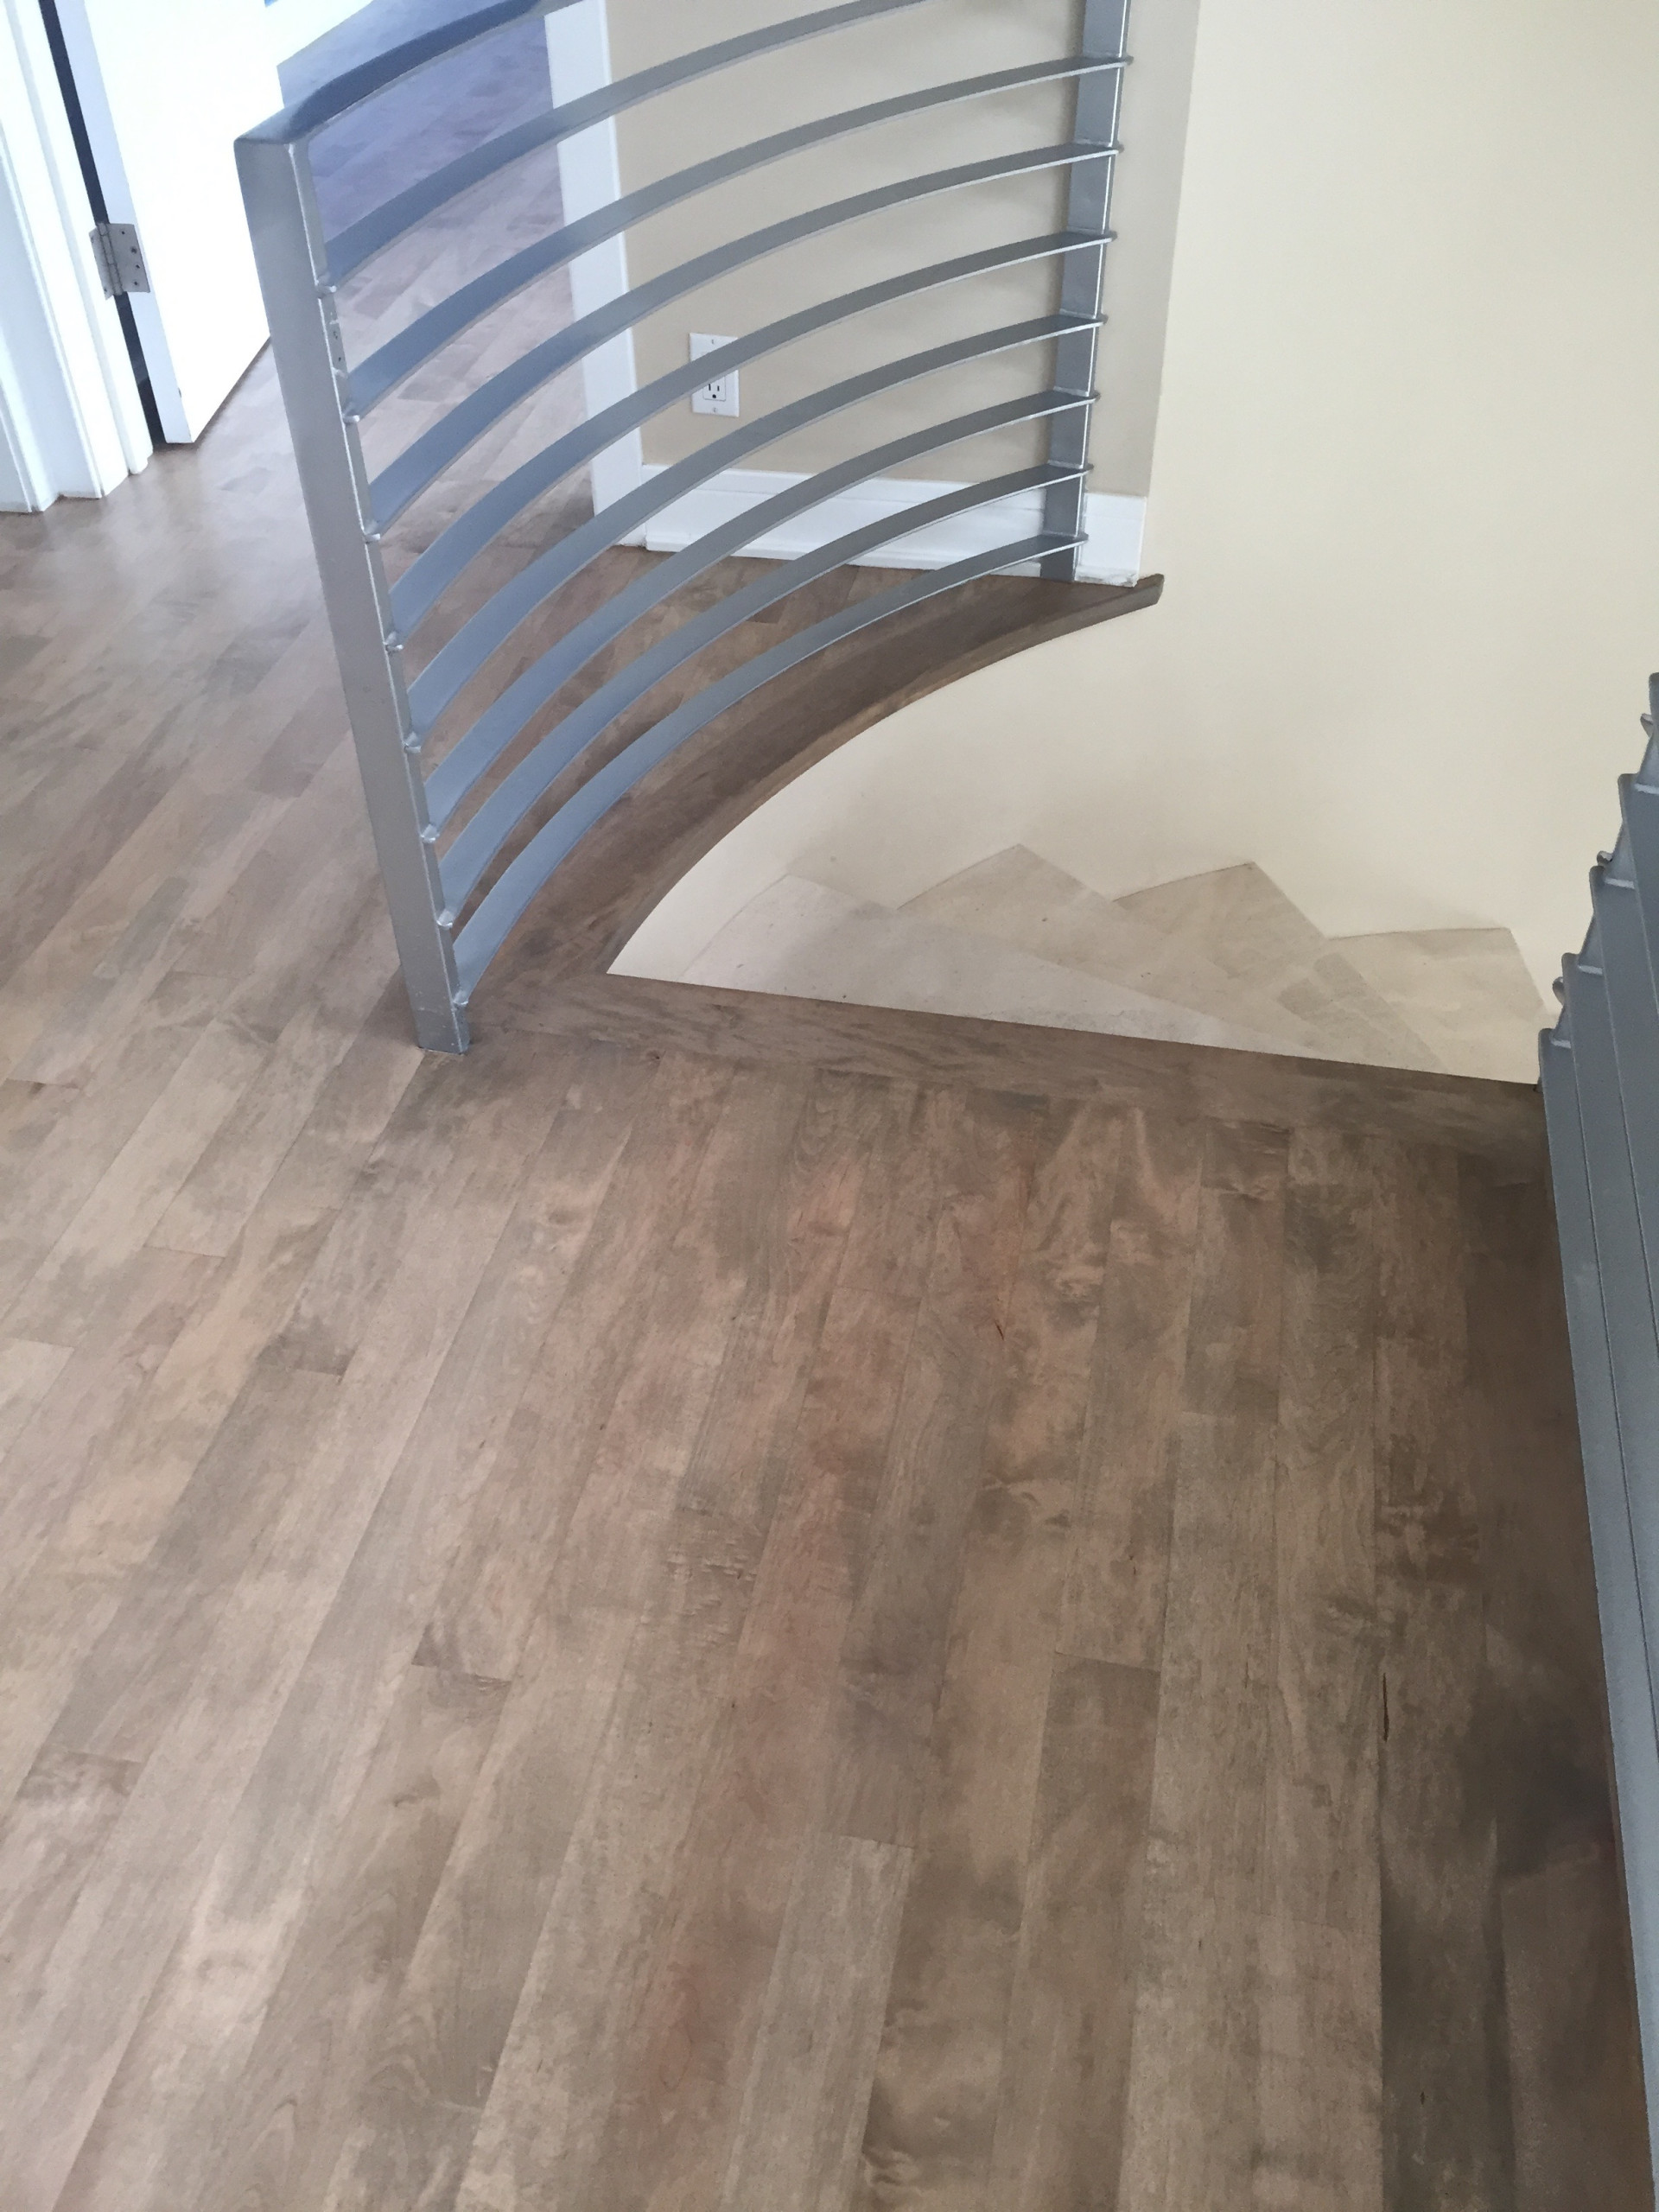 Solid Maple Strip Flooring Refinished, Grey Maple Hardwood Floors